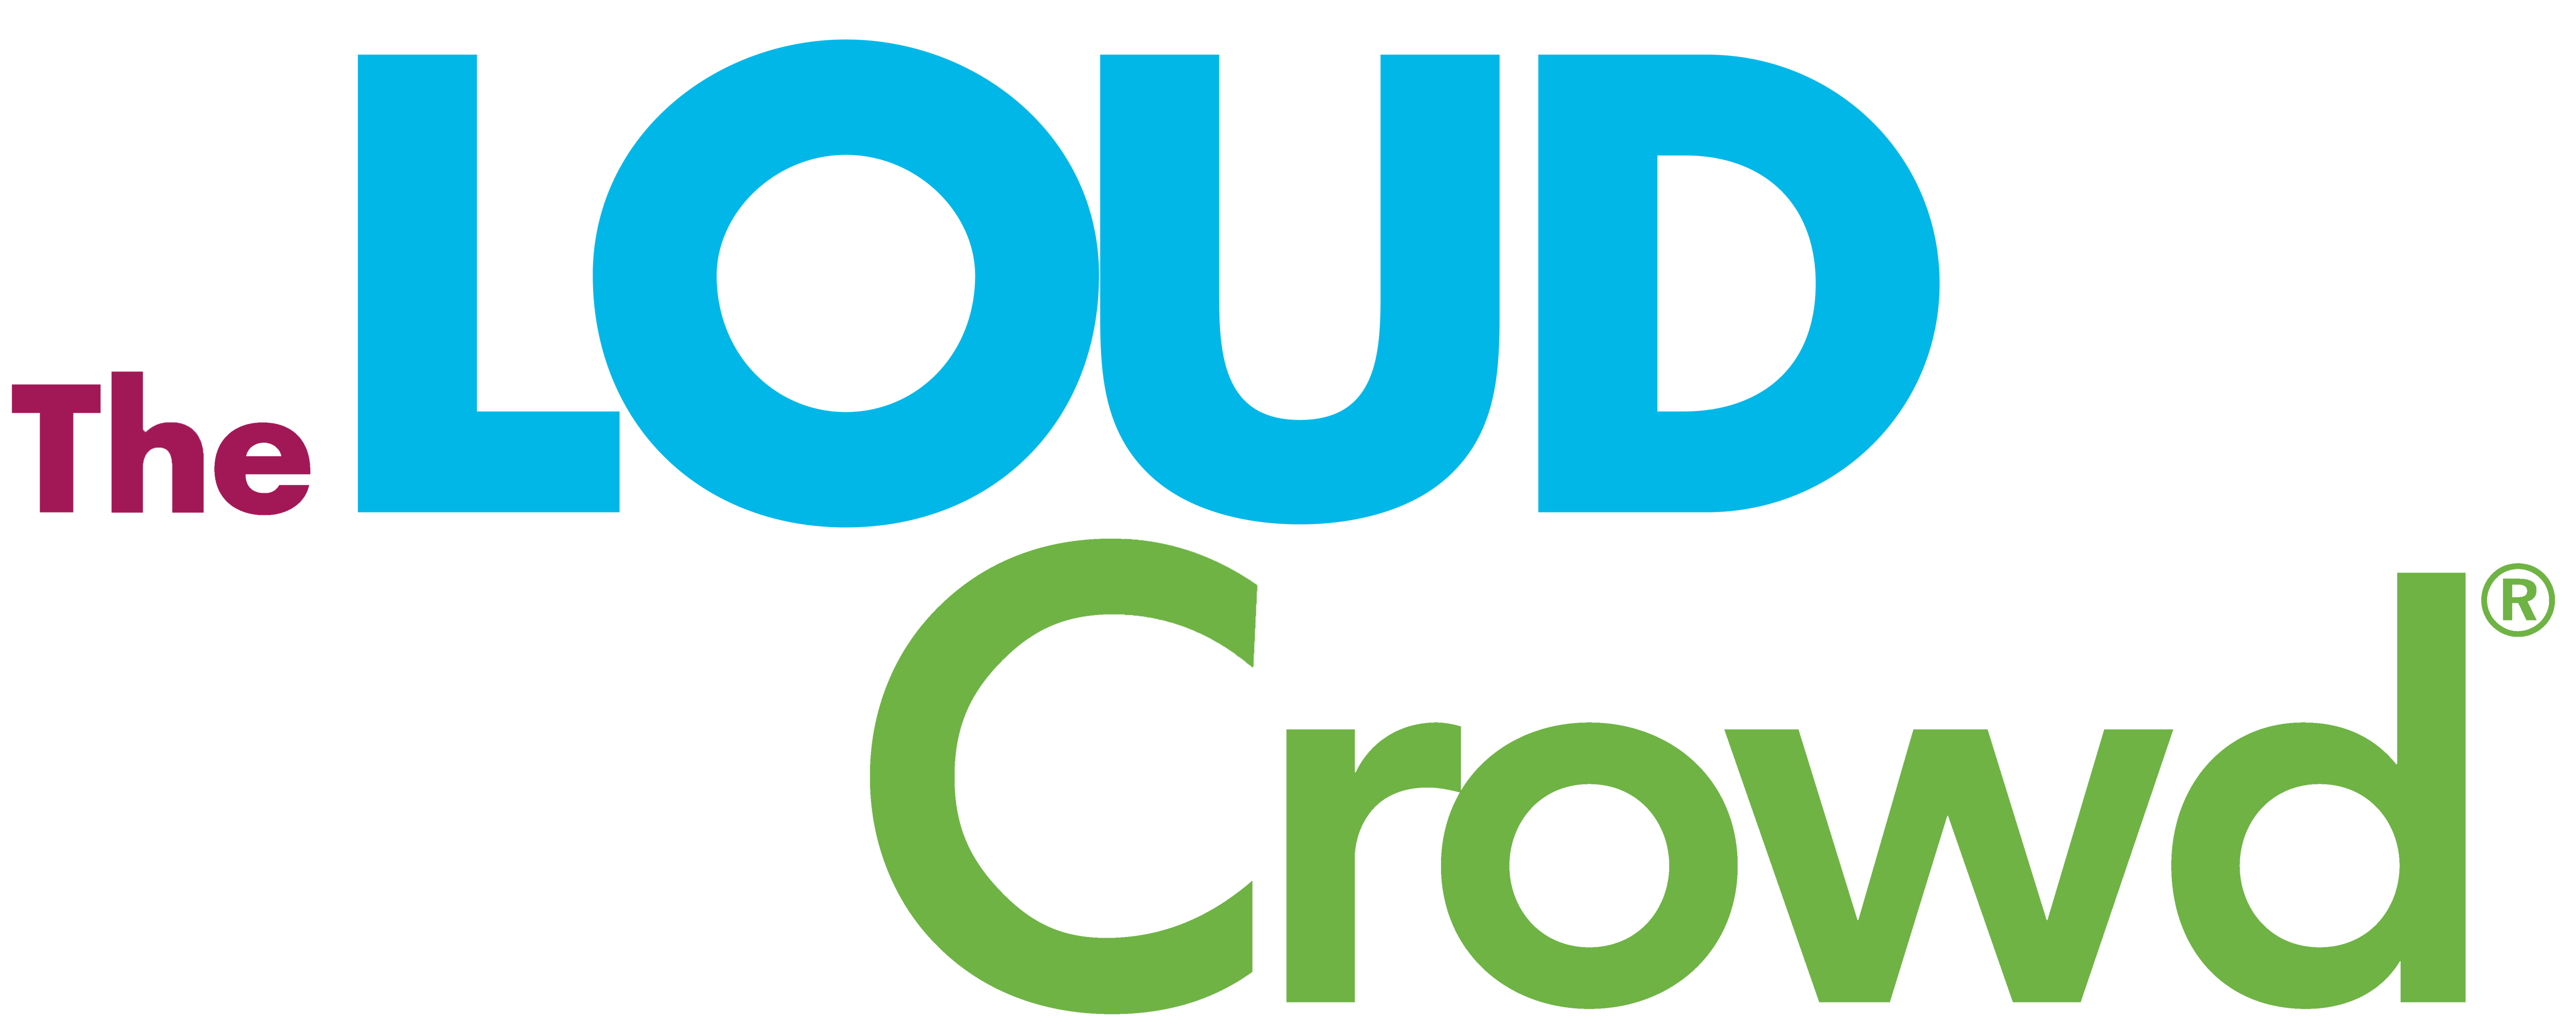 The loud crowd logo